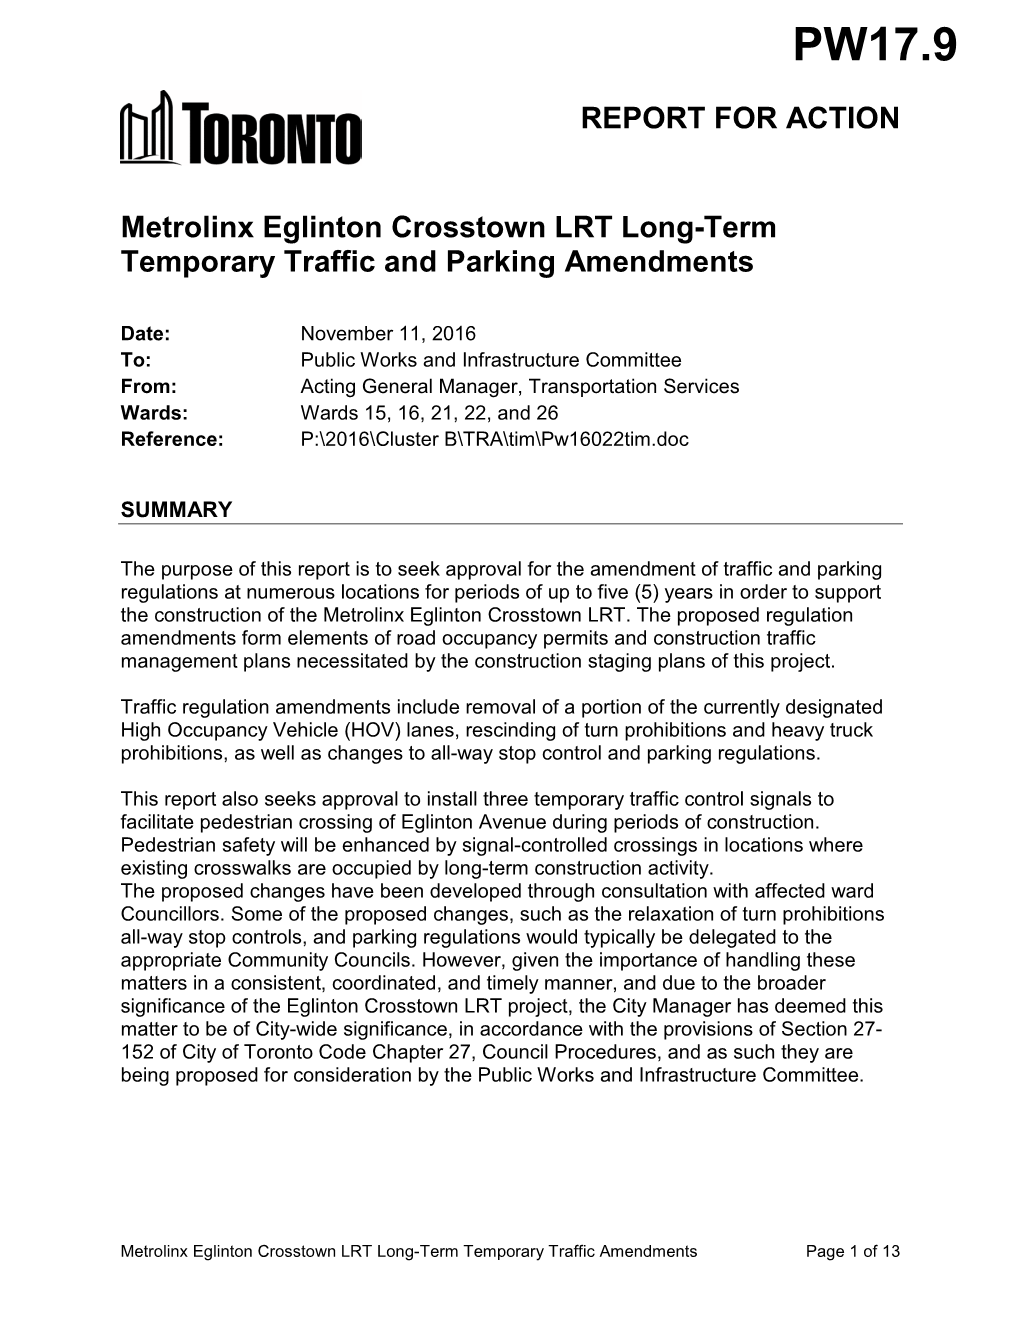 Metrolinx Eglinton Crosstown LRT Long-Term Temporary Traffic and Parking Amendments